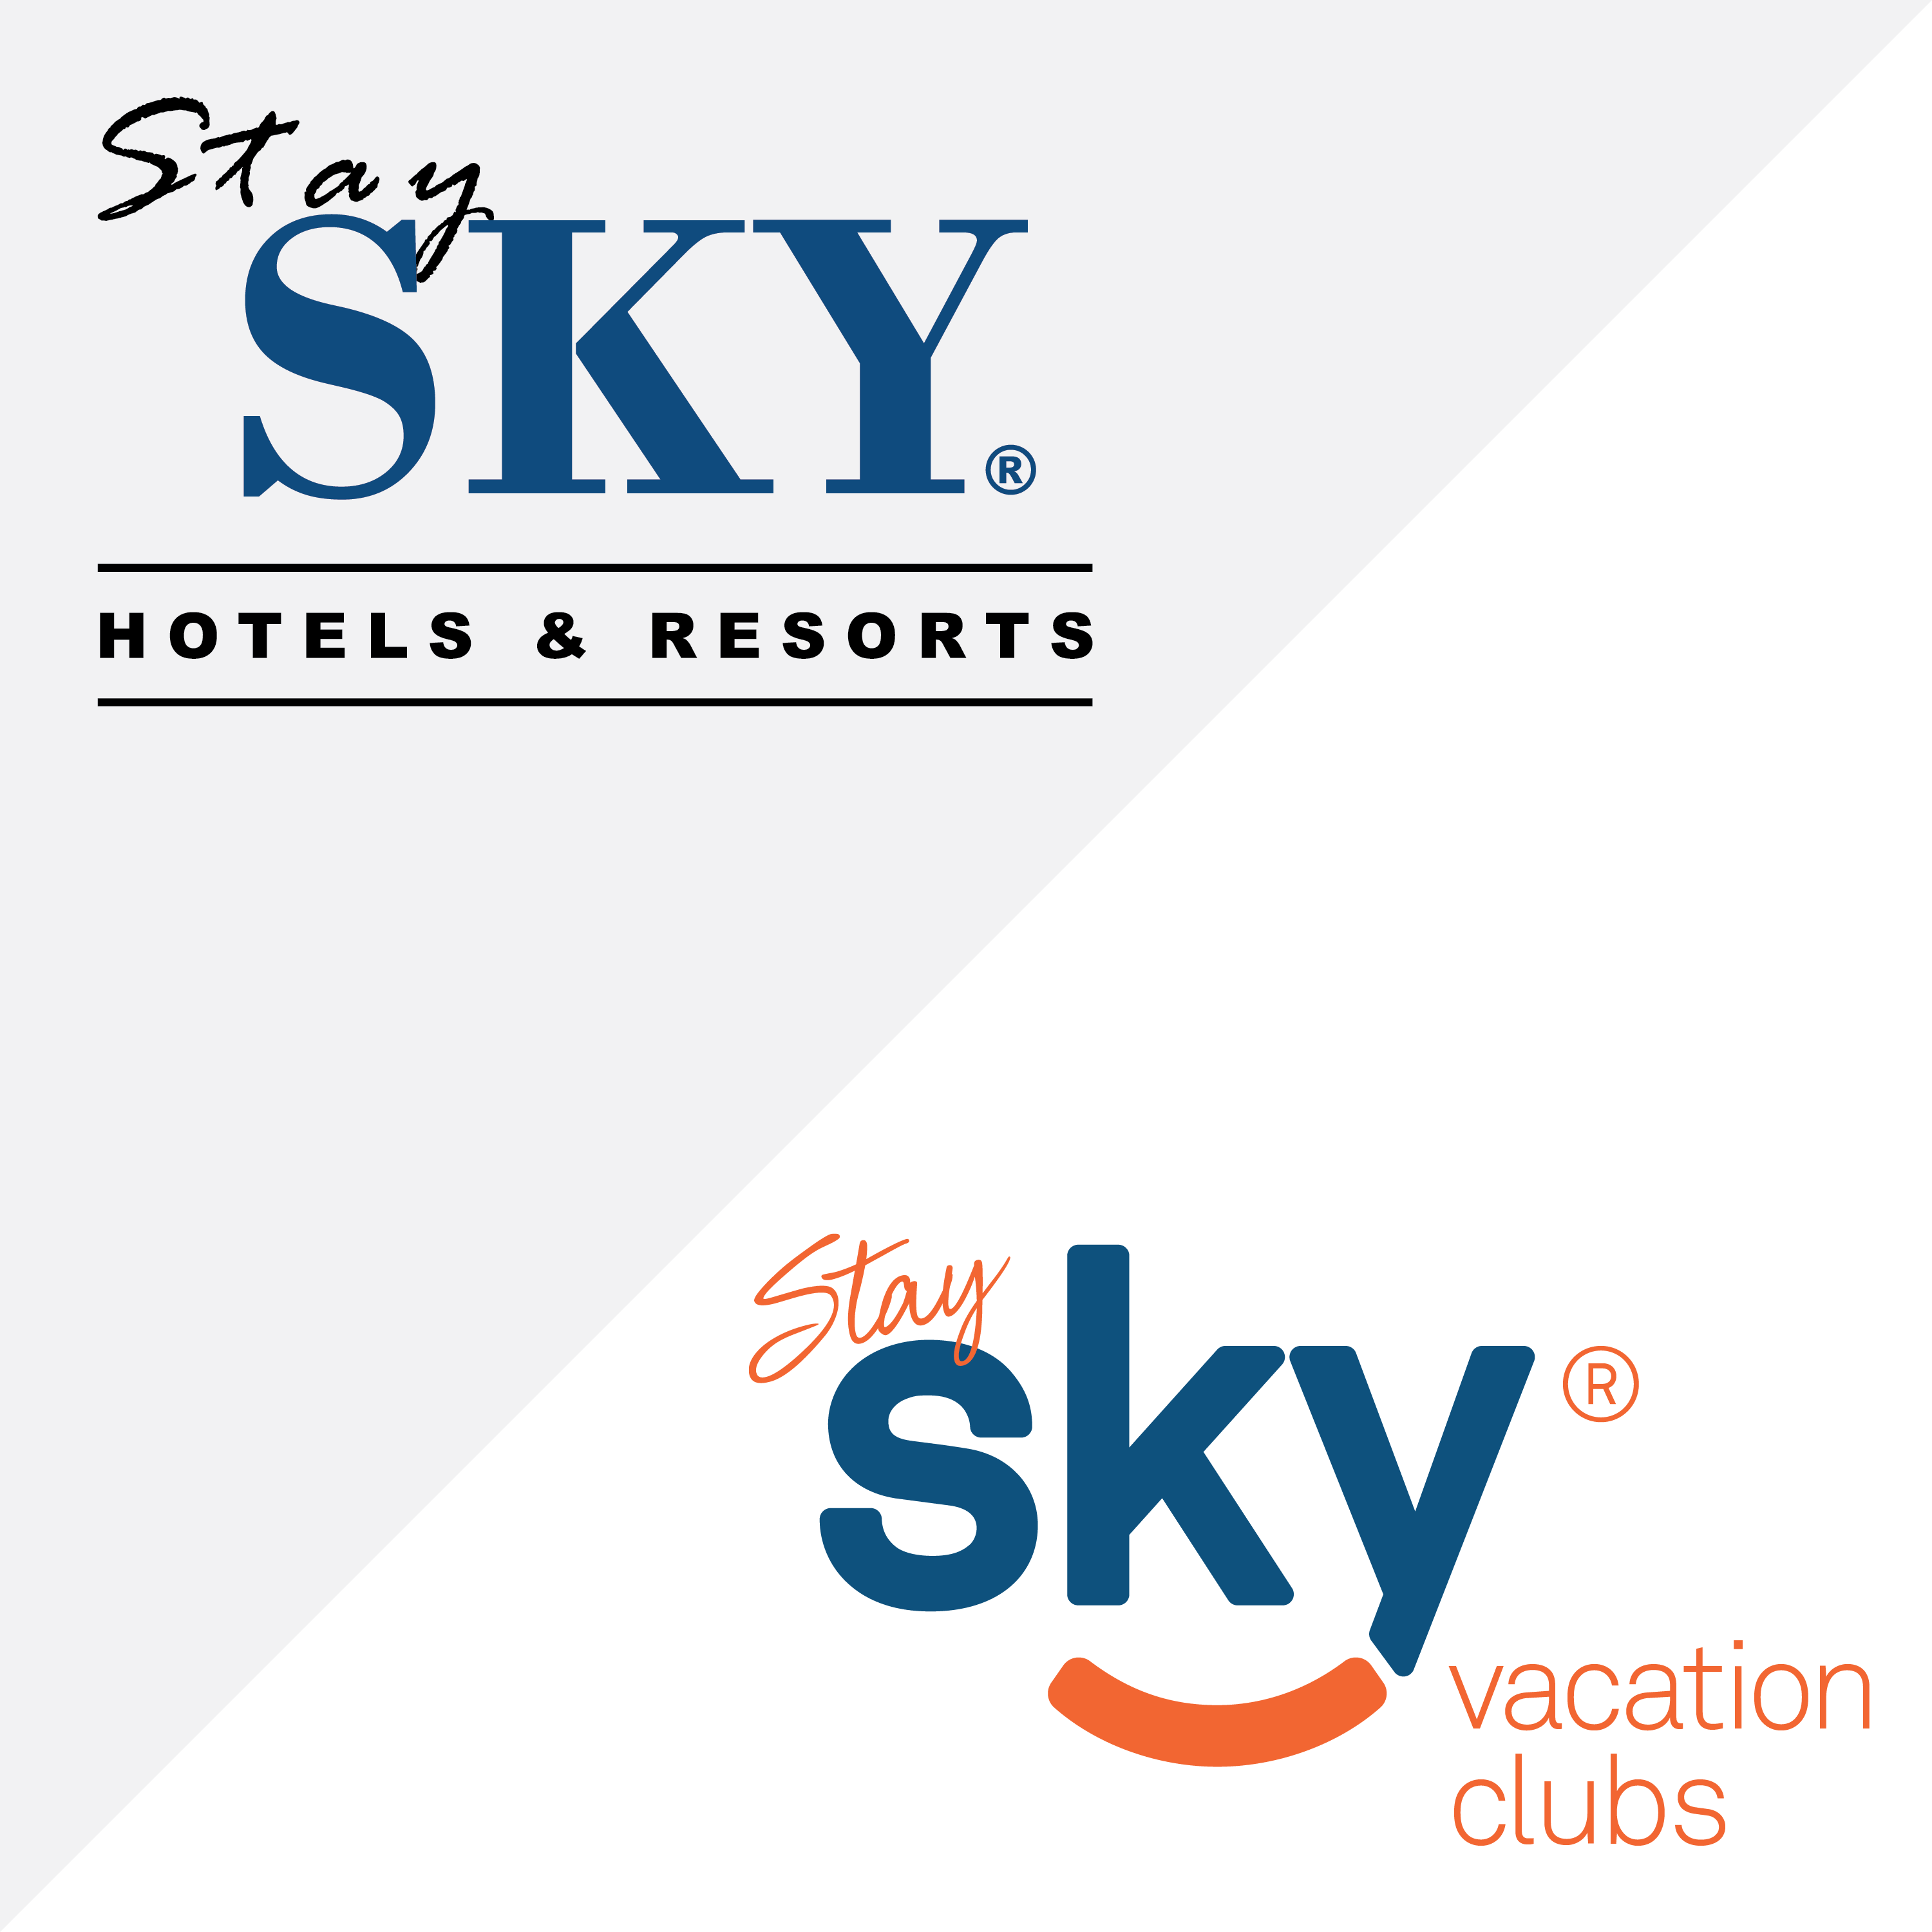 staySky Hotels & Resorts/ staySky Vacation Clubs Company Logo